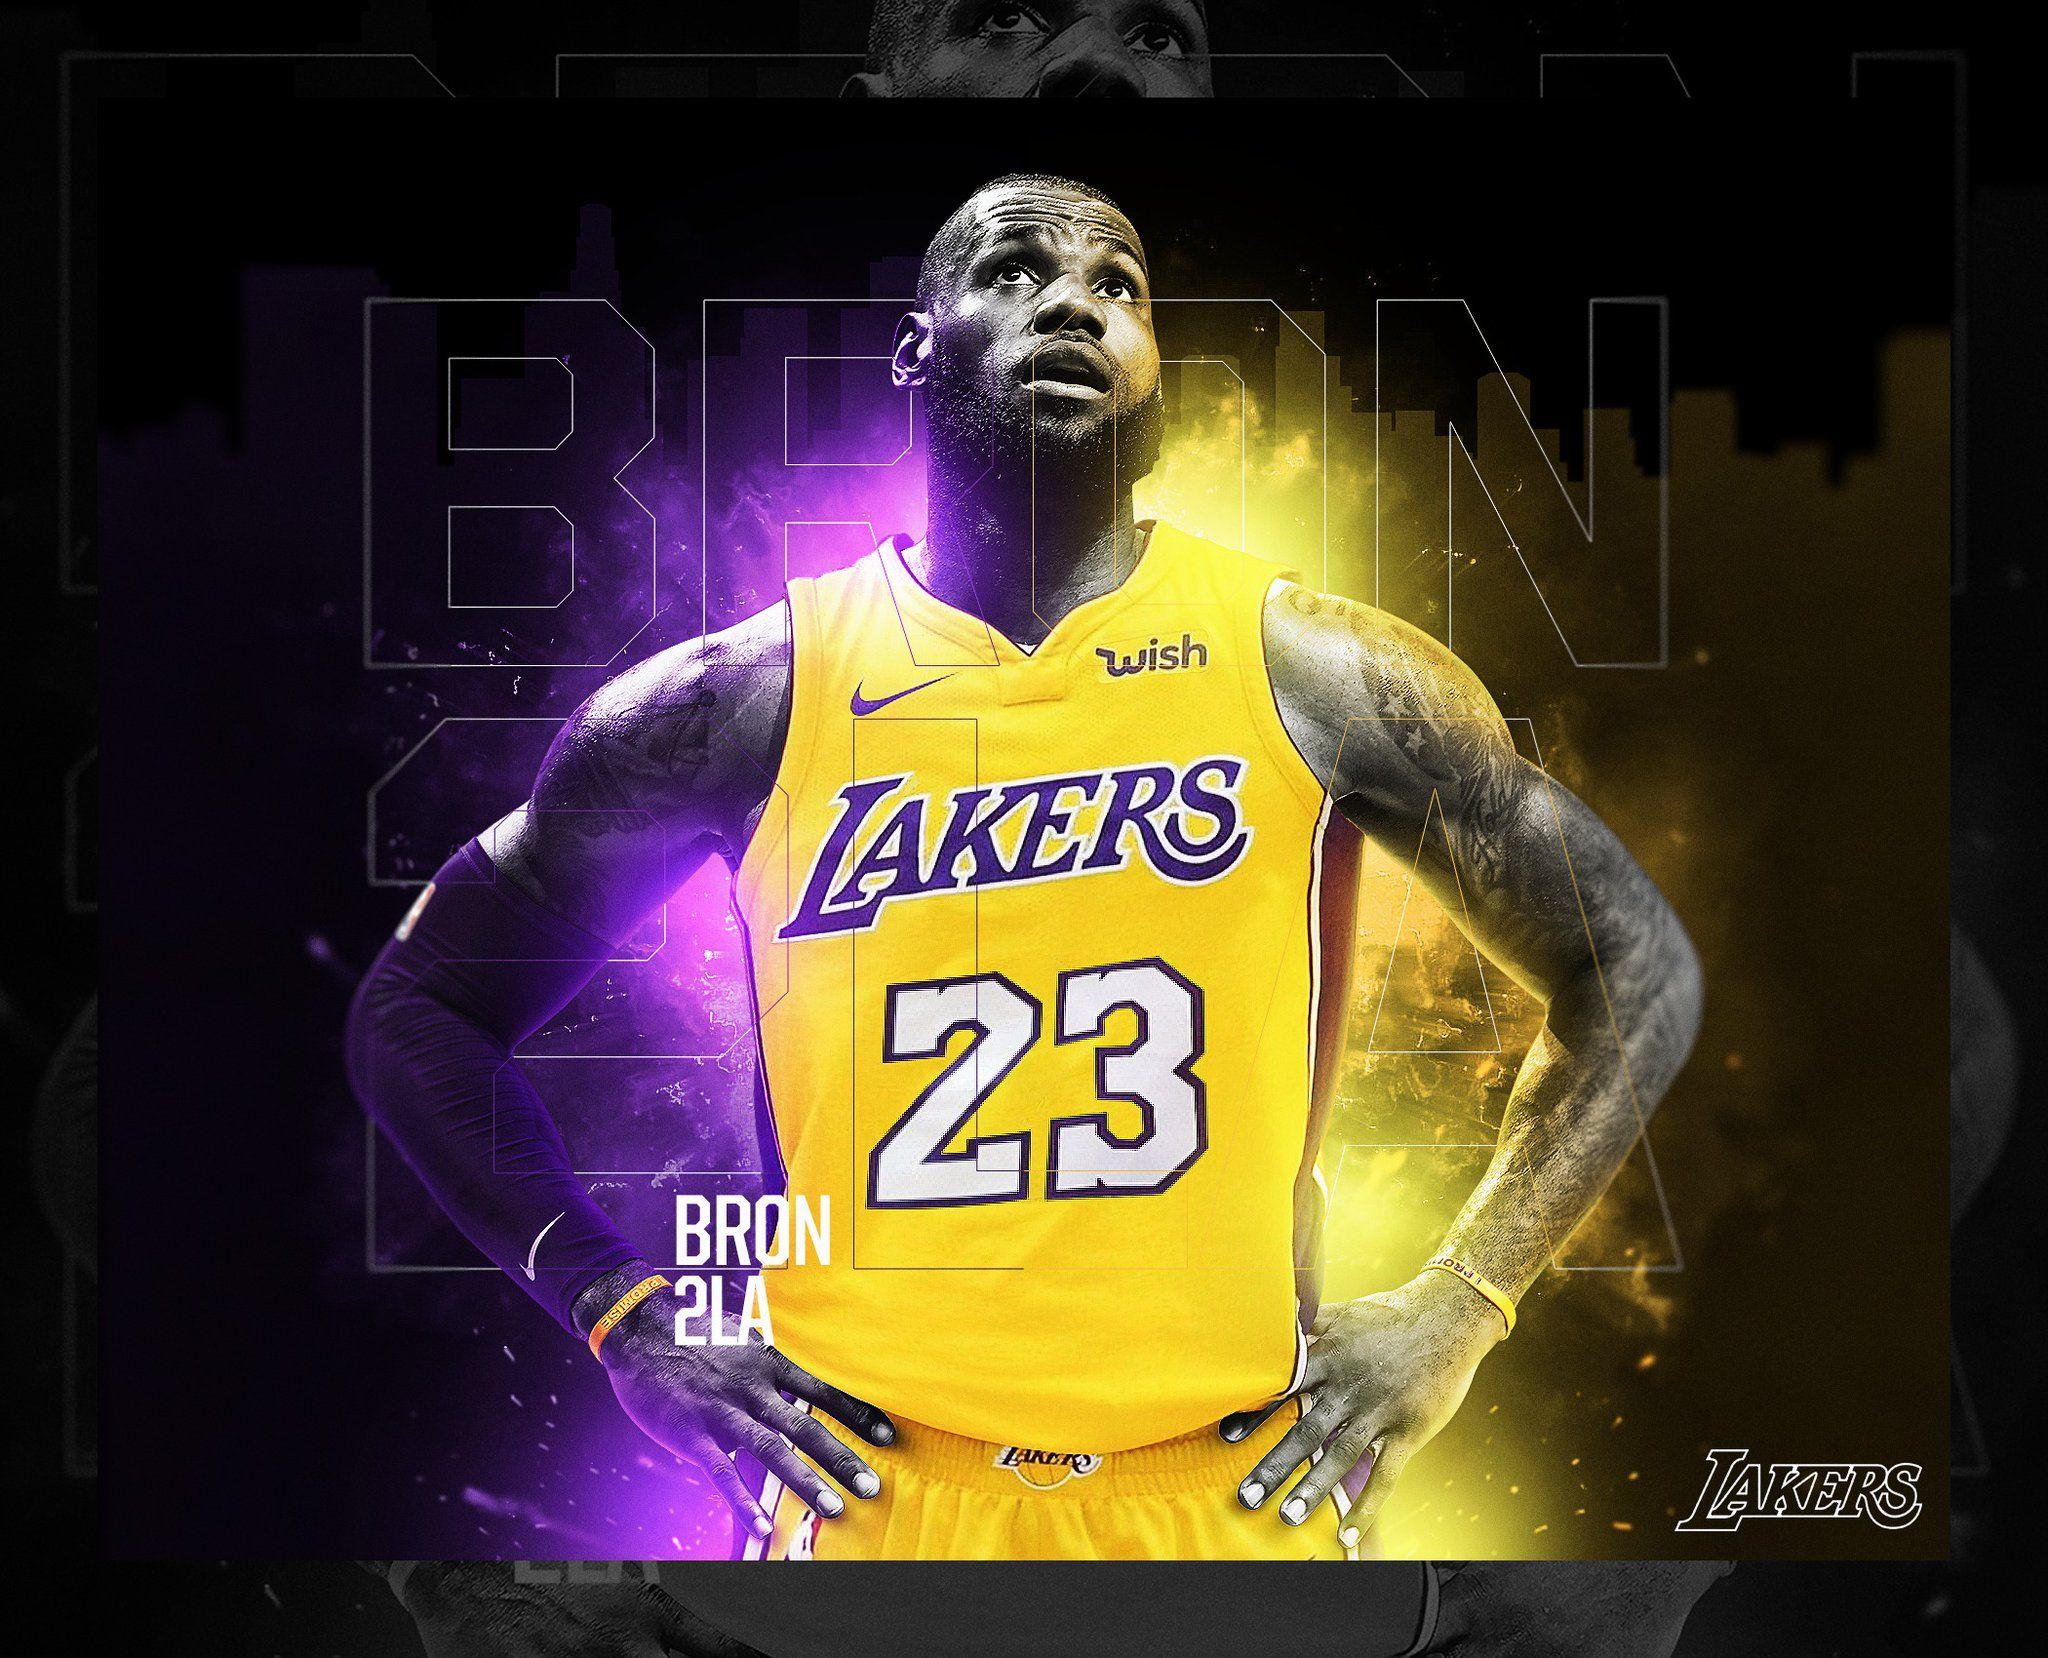 LeBron James Lakers Wallpaper Free LeBron James Lakers Background